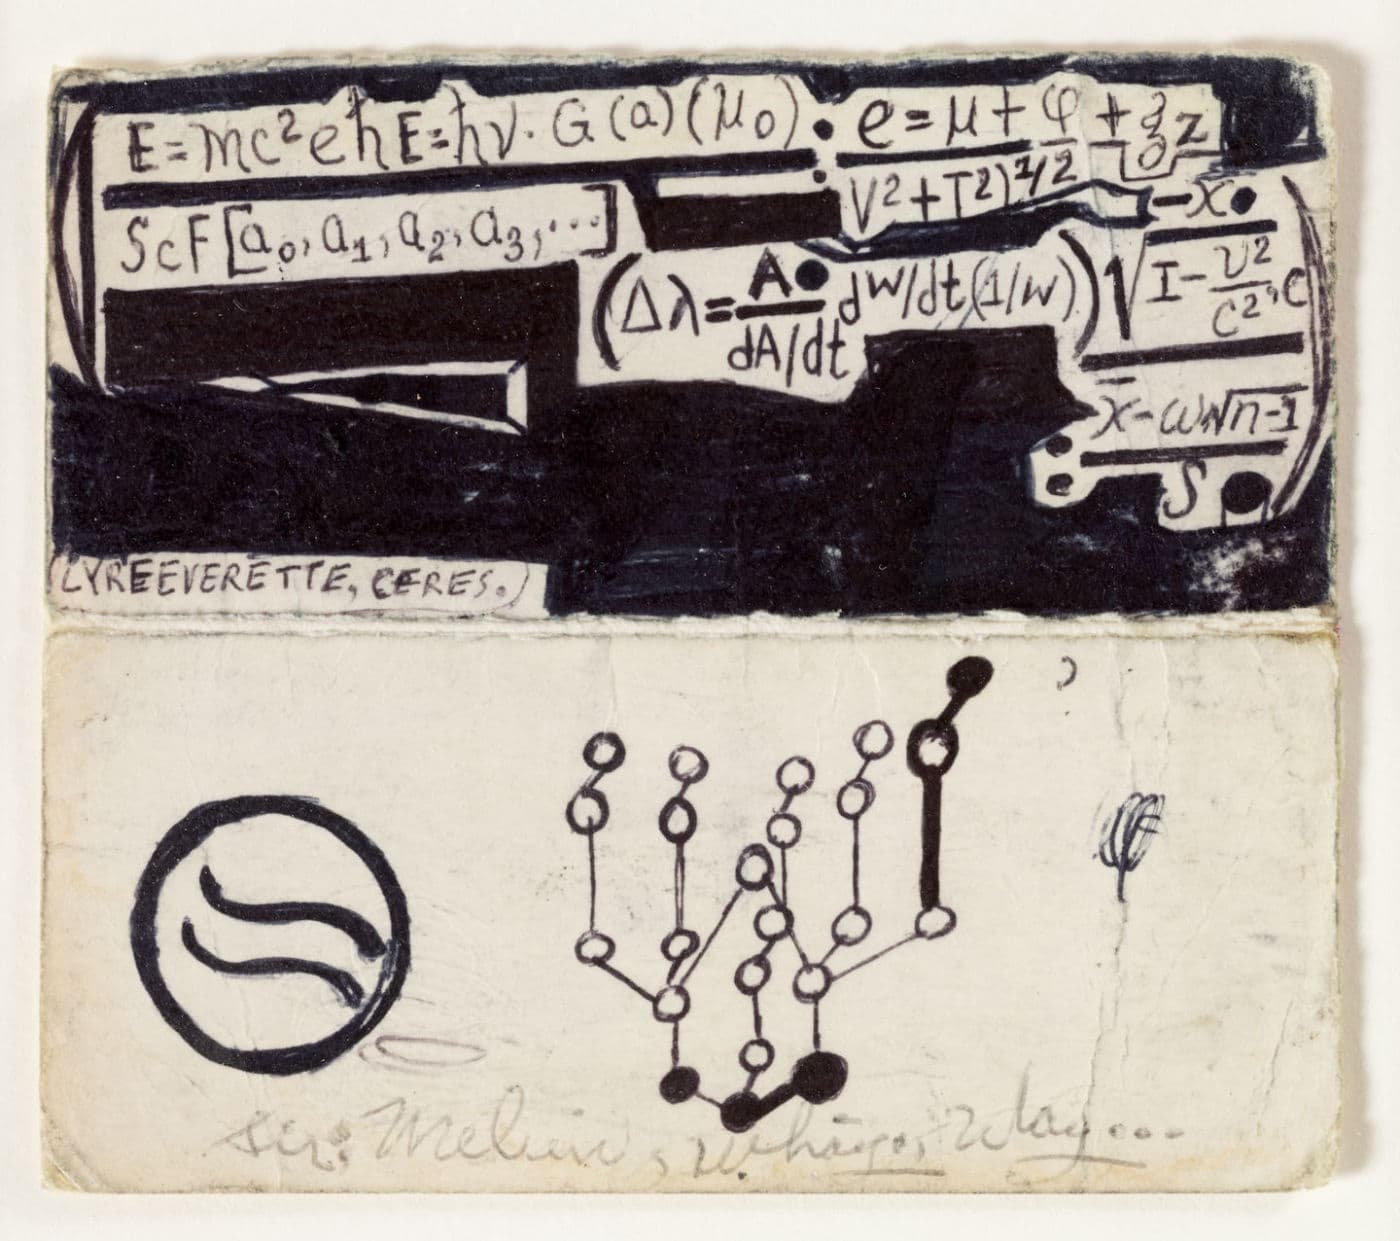 Melvin Way, Lyreeverette, n.d. stylo à bille sur papier 11,4 x 10,2 cm Courtesy Andrew Edlin Gallery, New York ©André Morin